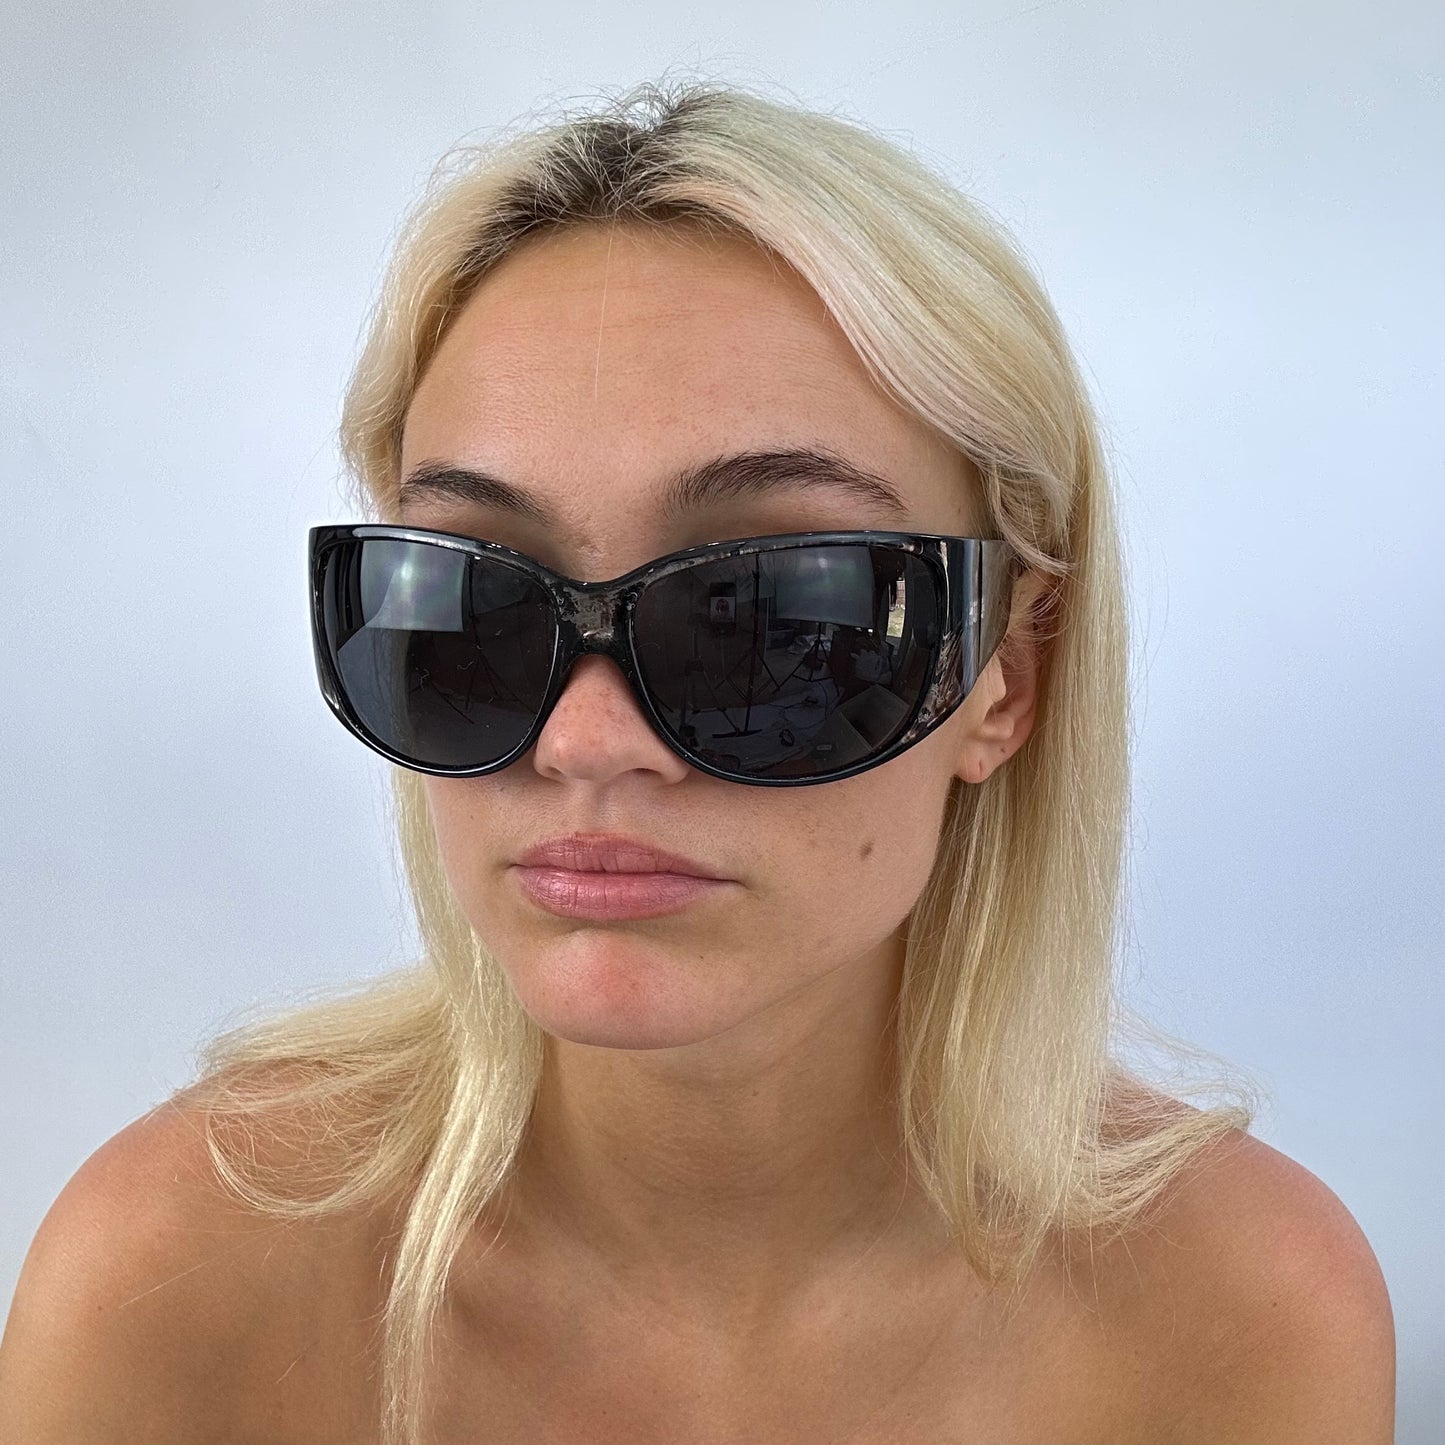 MODEL OFF DUTY DROP | black patterned sunglasses